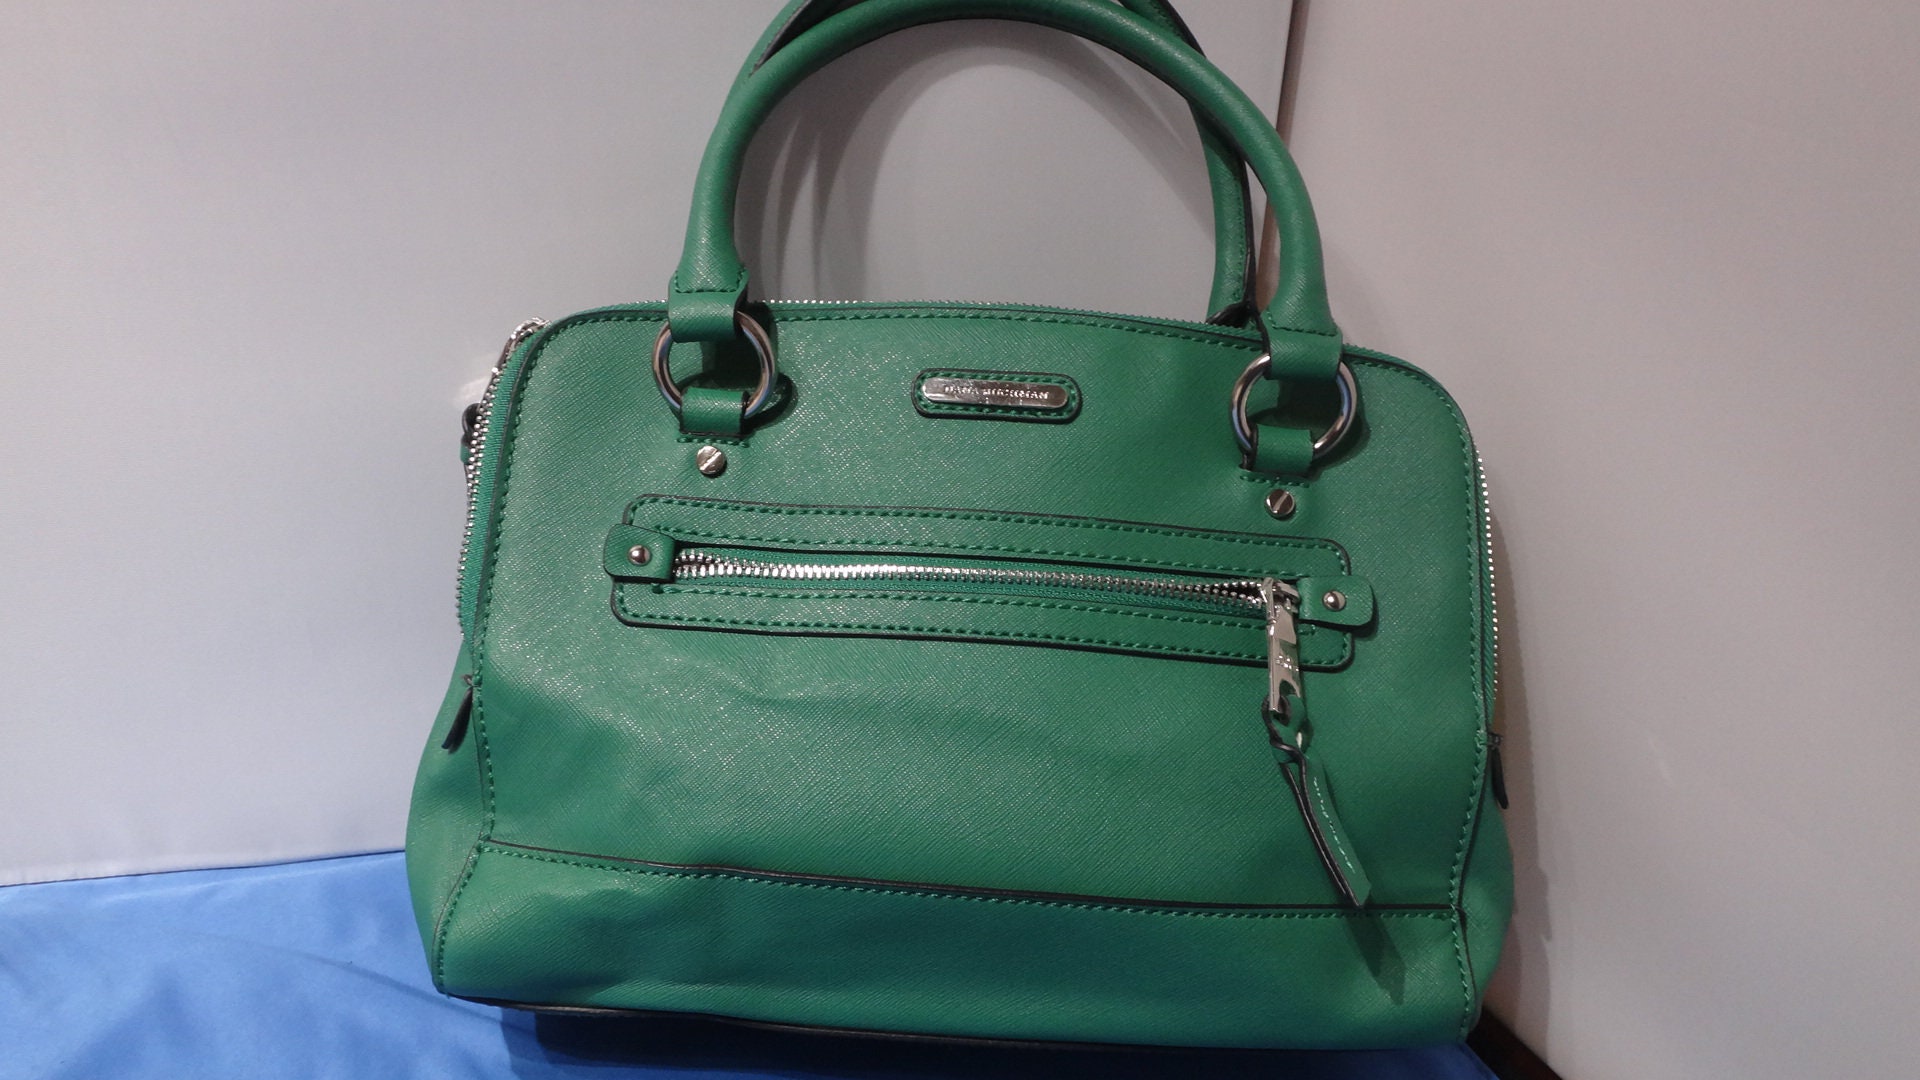 NEW Kate Landry crossbody purse in green color | eBay